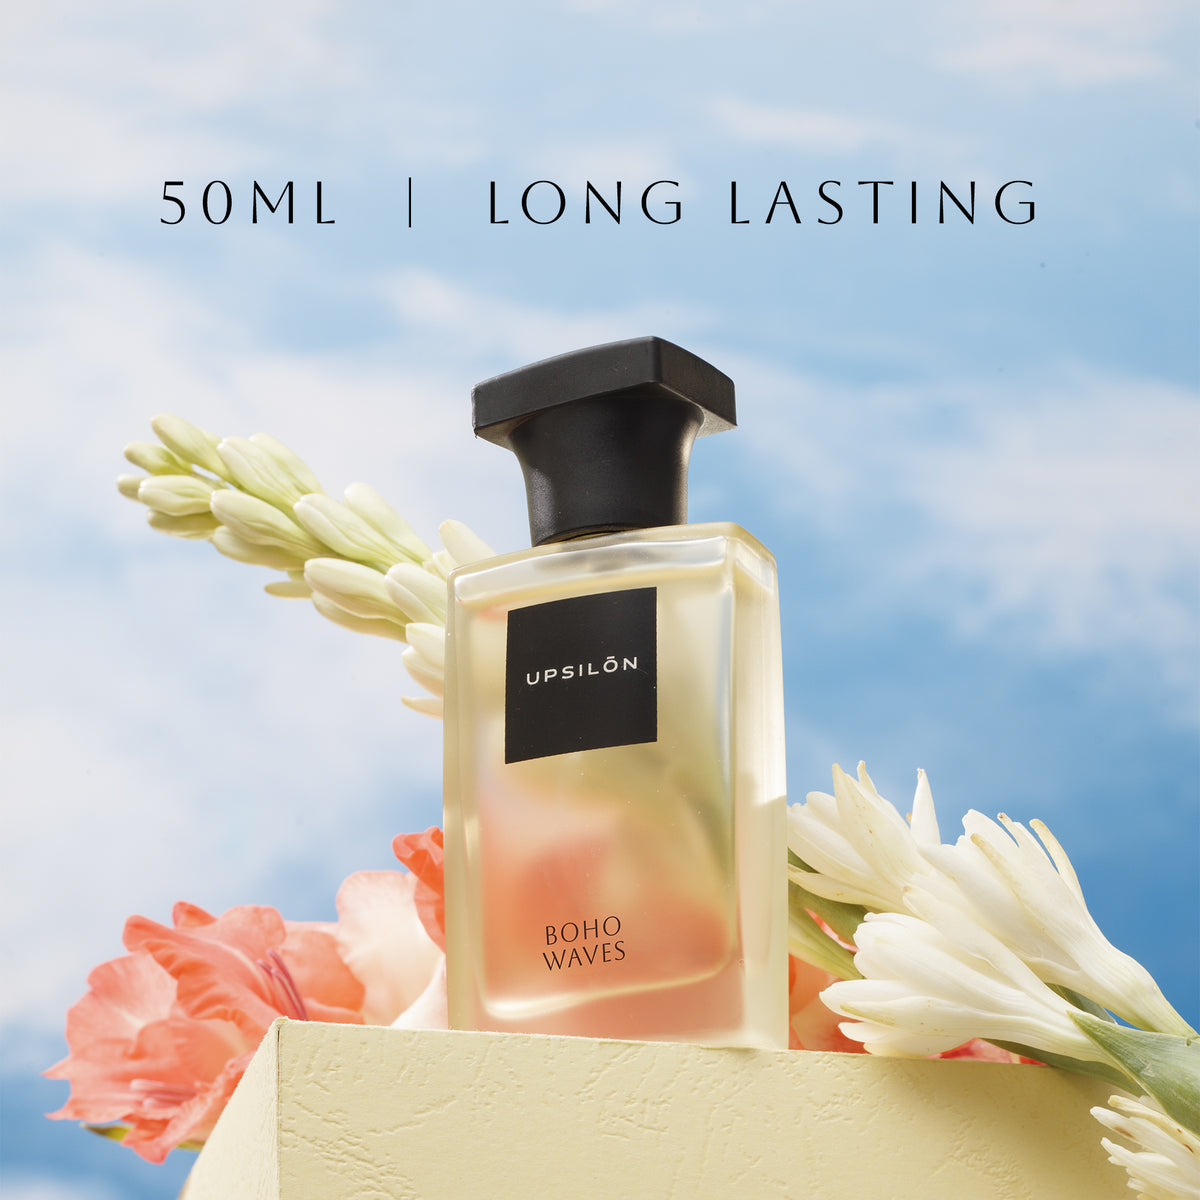 bottle of UPSILON Eau de Parfum in a travel-size gift box, with text describing the fragrance as "long-lasting" and "eau de parfum", 50ml Long lasting